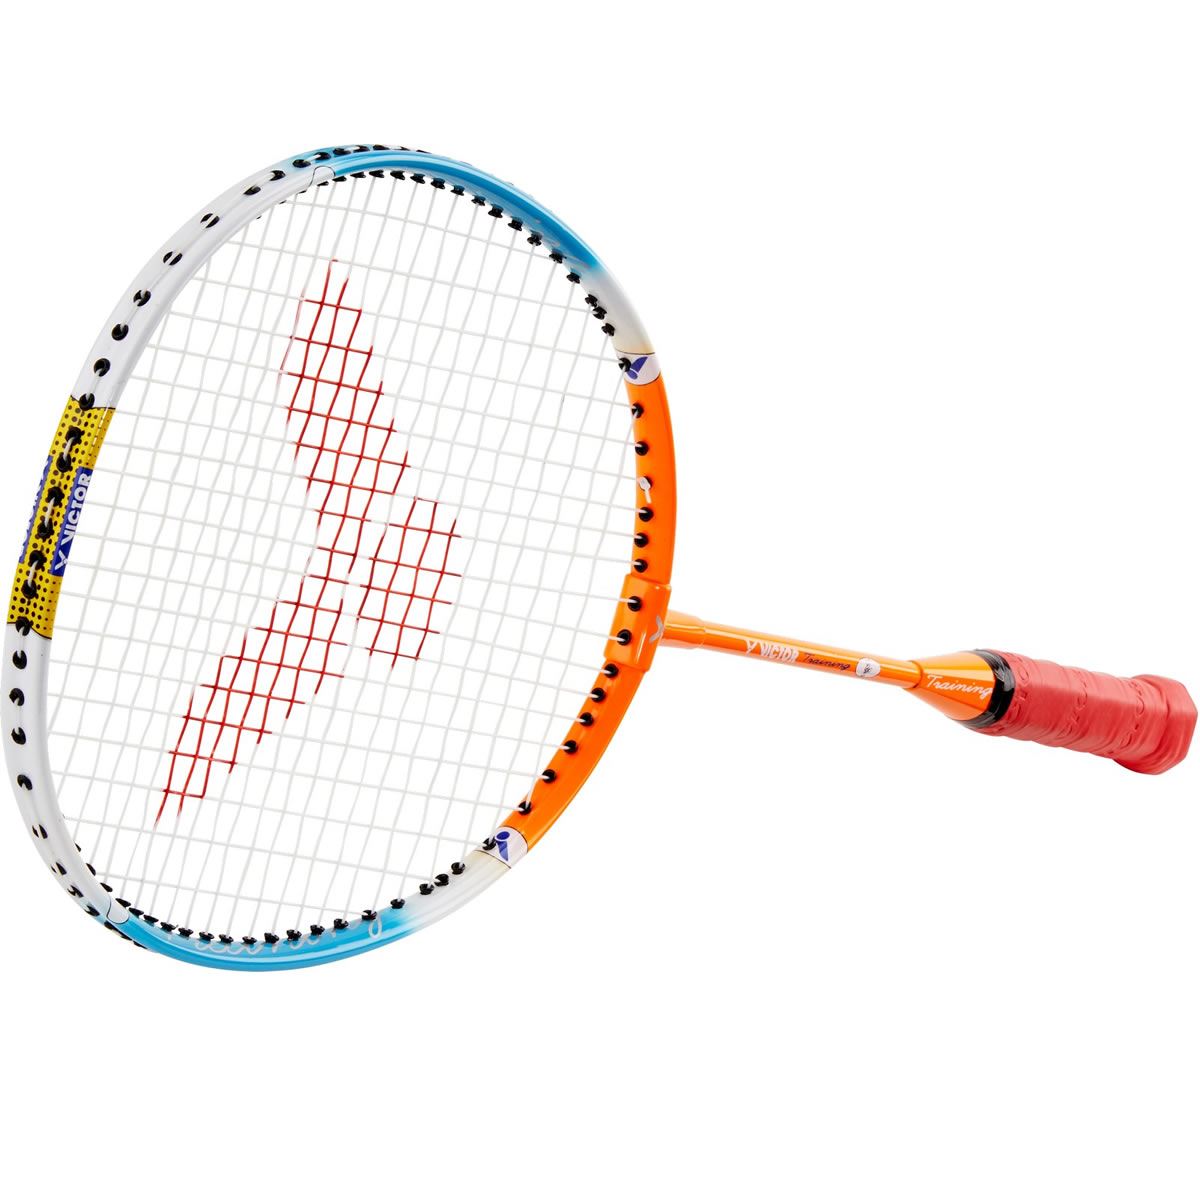 Victor Training Badminton Racket - Orange Blue